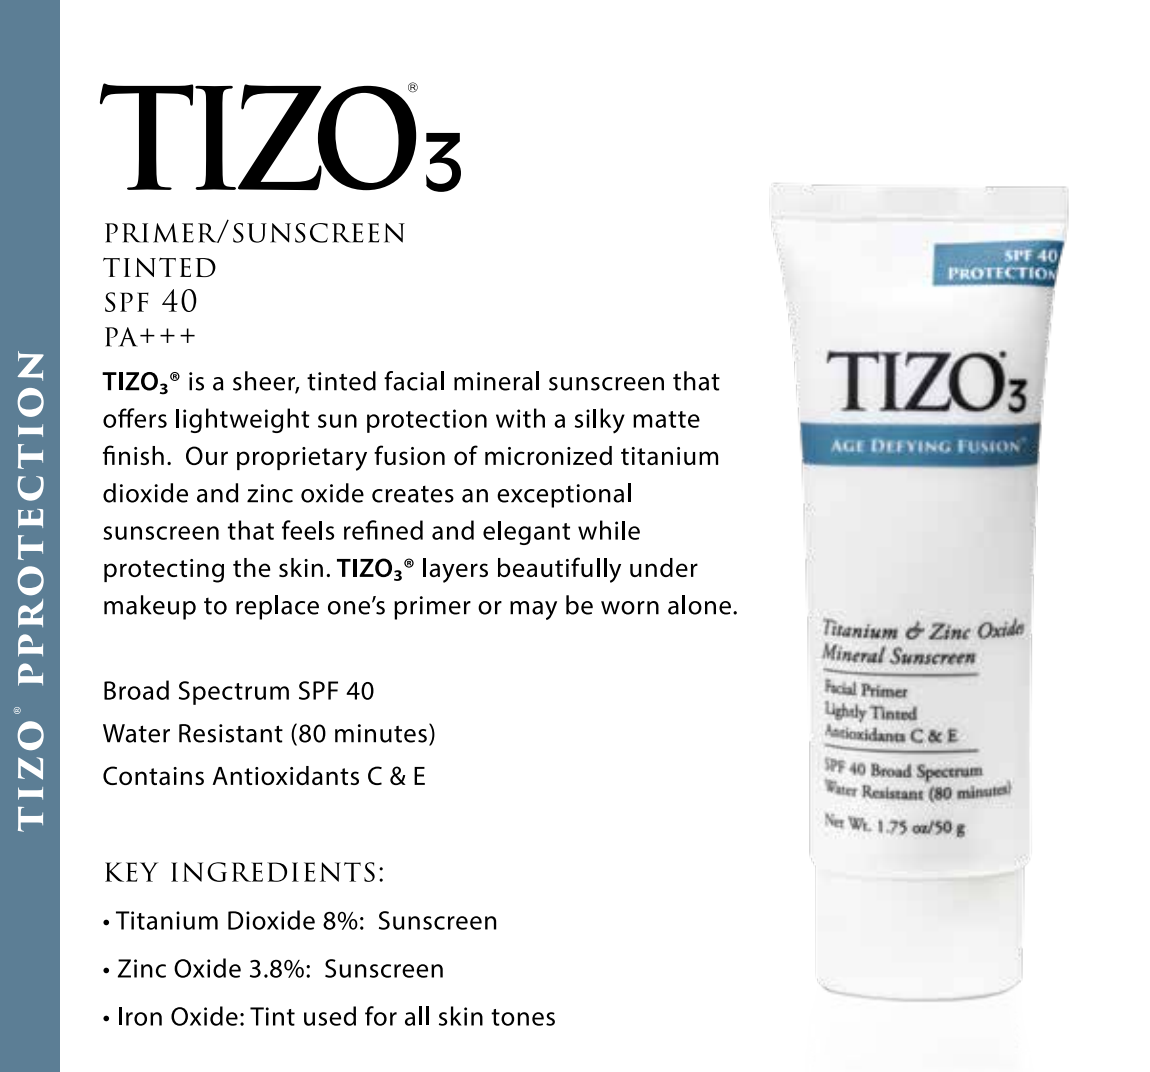 TIZO3 Facial Primer Tinted Mineral Sunscreen, SPF 40, PA+++